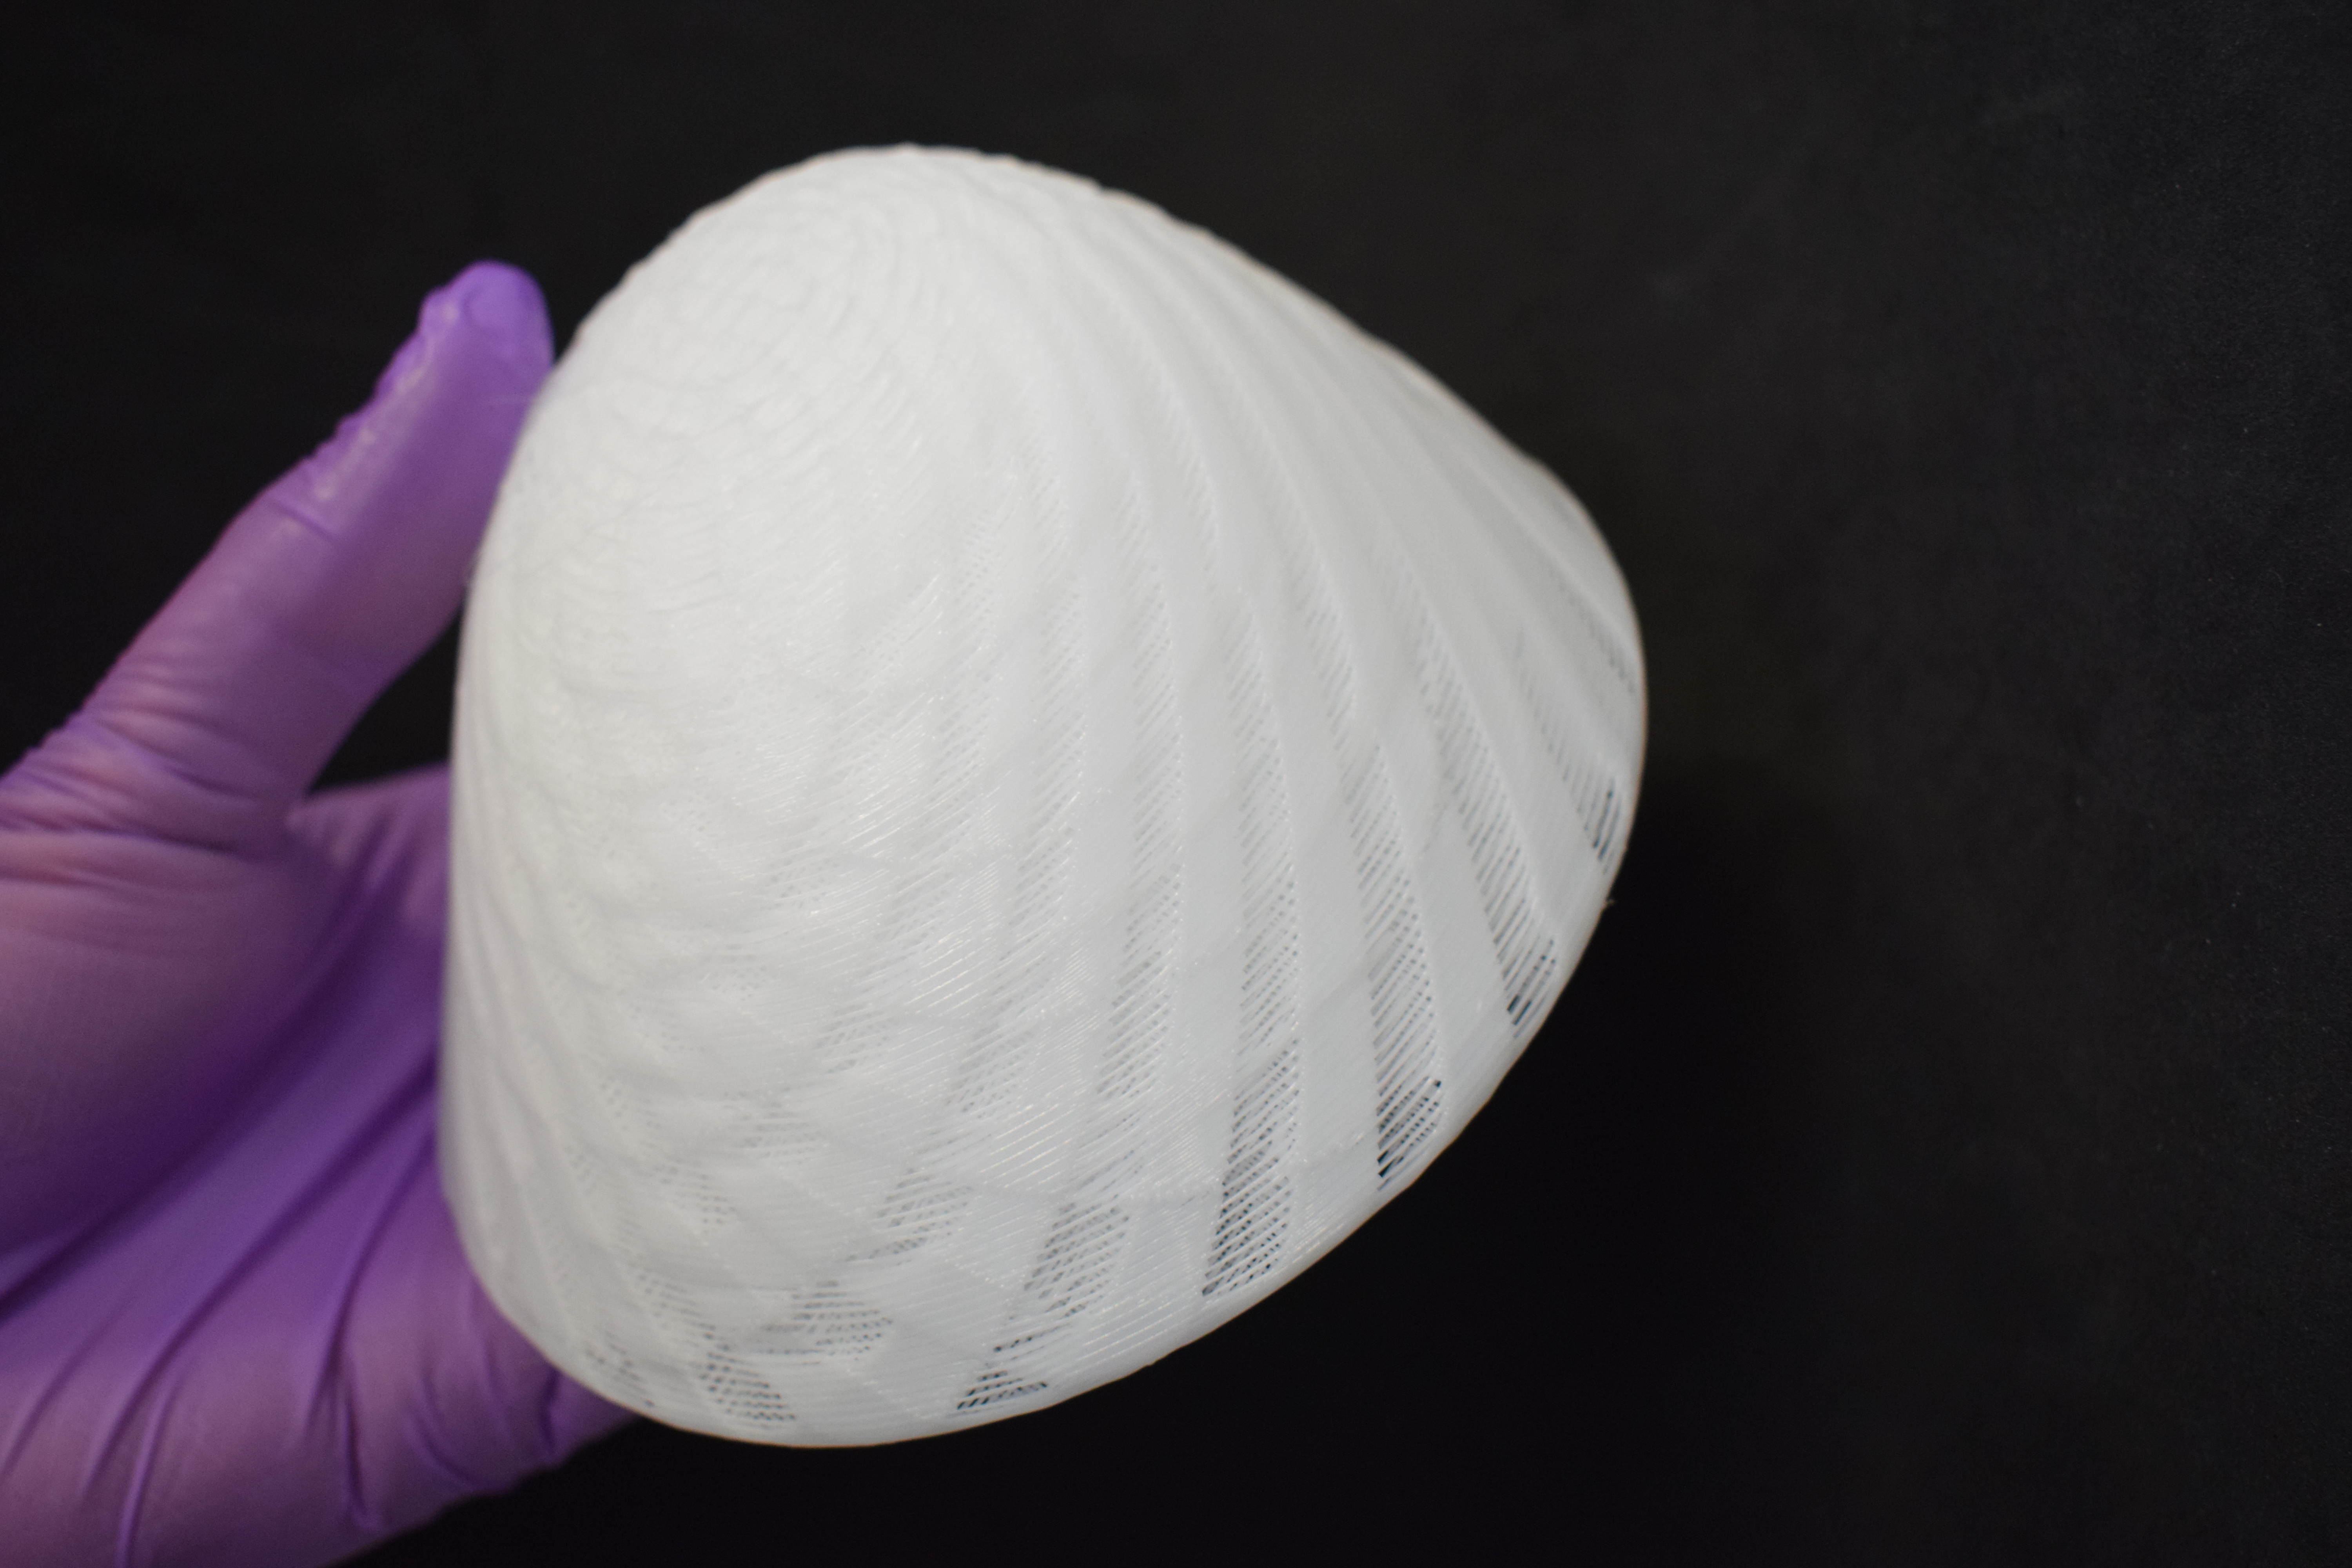 BellaSeno 3D printed breast implants human trials in Australia - 3D Printing Industry